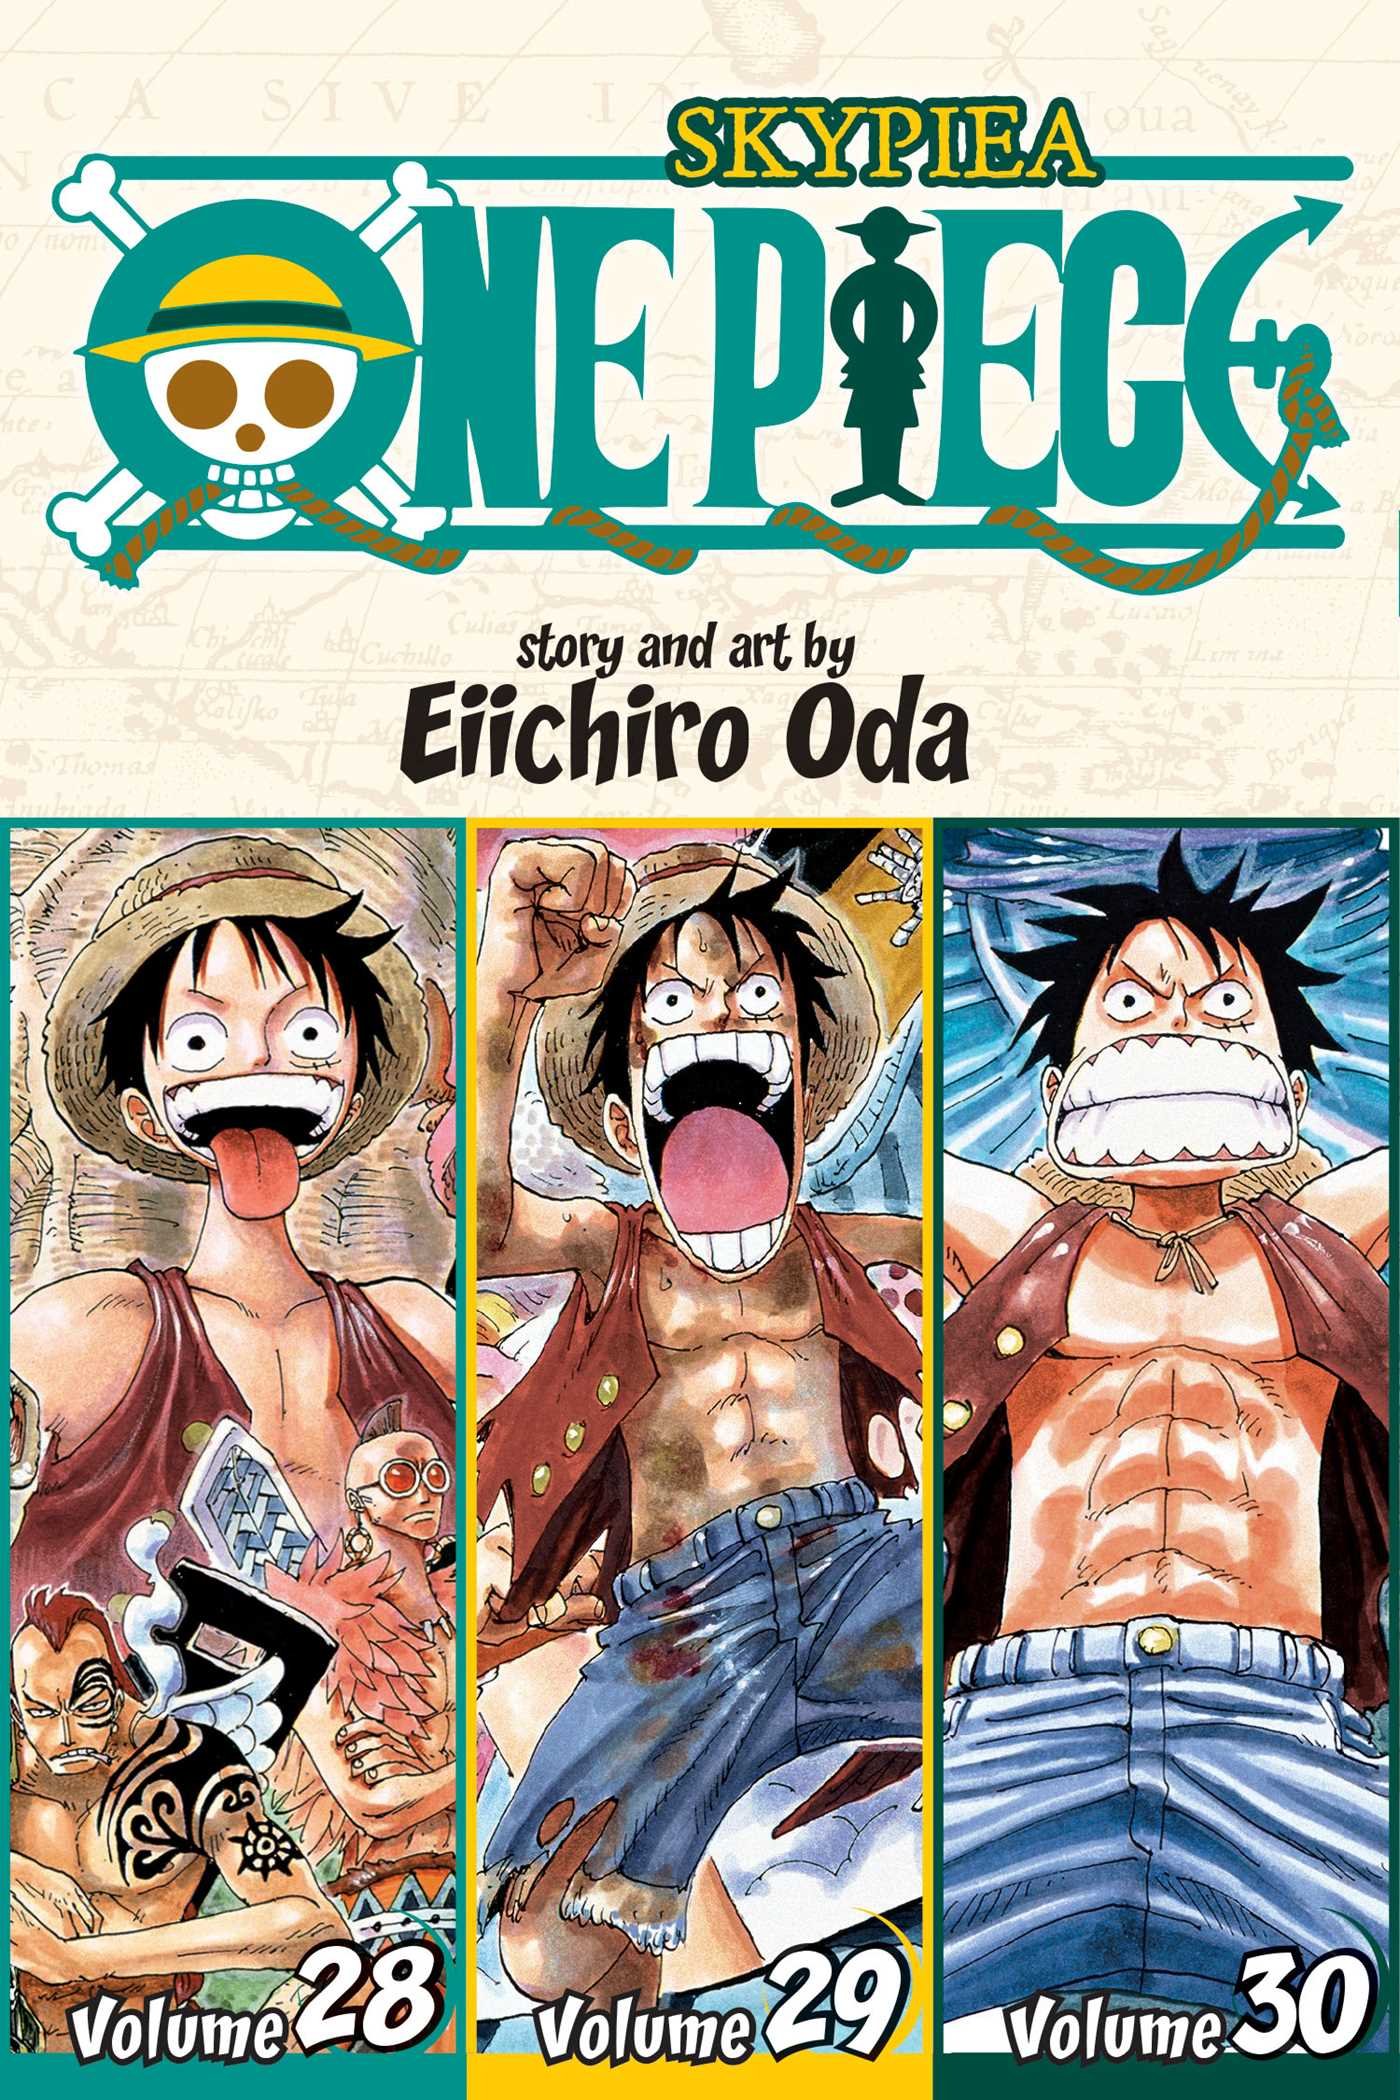 One Piece One Piece Skypiea 3 In 1 Edition Volume 10 By Eiichiro Oda Published By Viz Media Llc Forbiddenplanet Com Uk And Worldwide Cult Entertainment Megastore